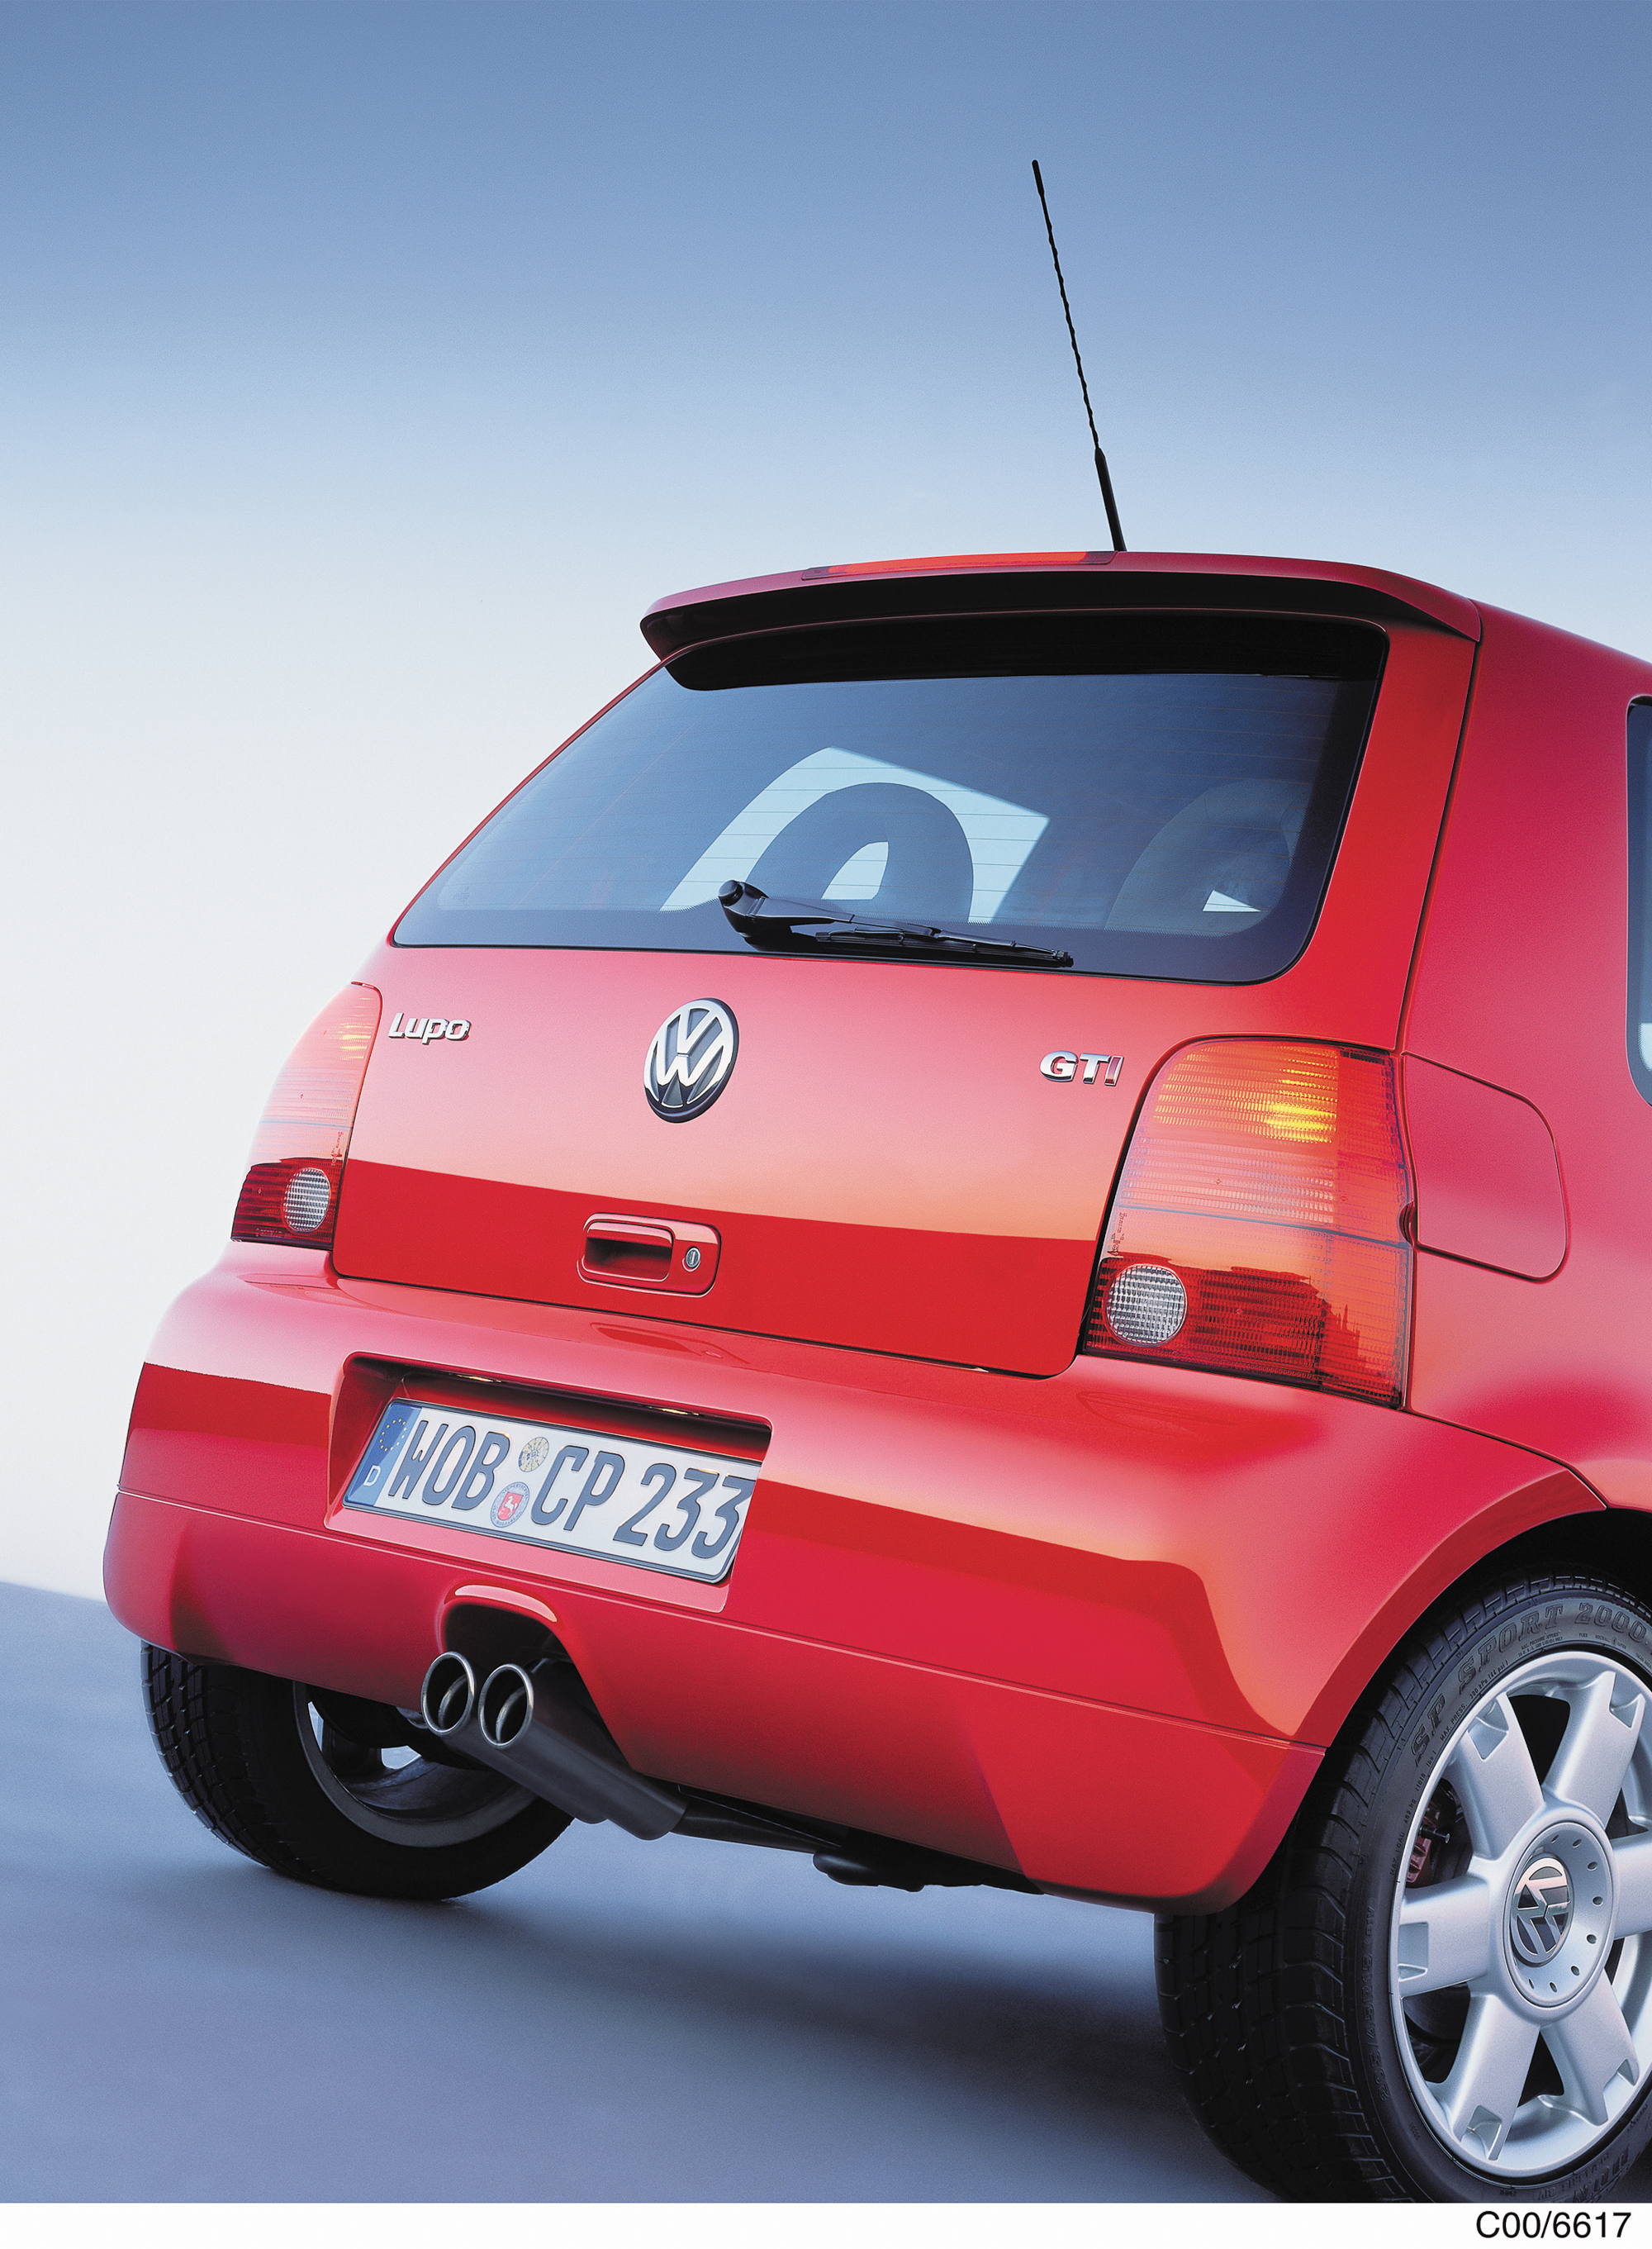 Volkswagen up! GTI reviews model